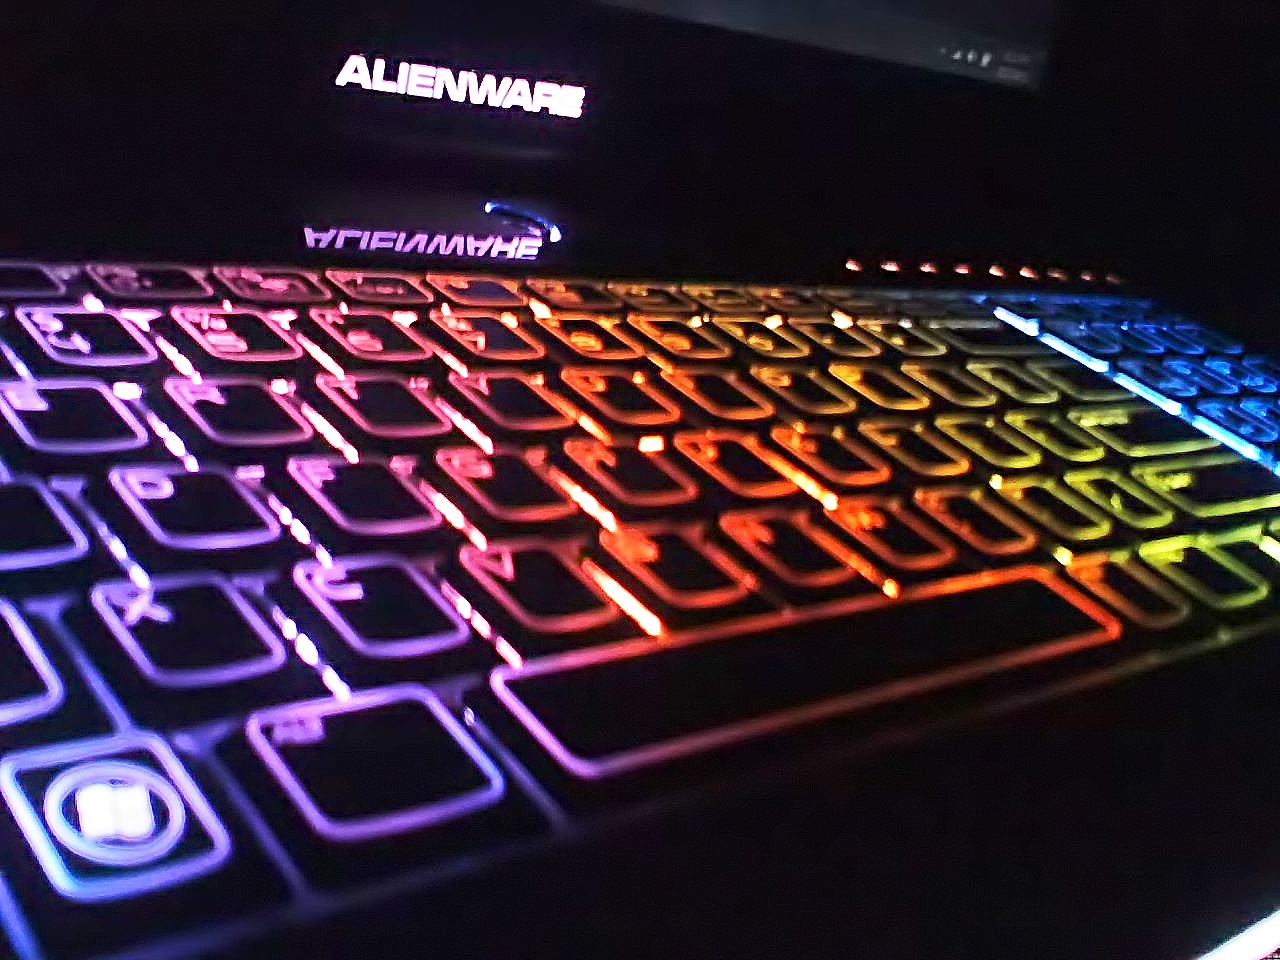 Alienware - Sunset Keyboard by DeviantDolphinART on DeviantArt